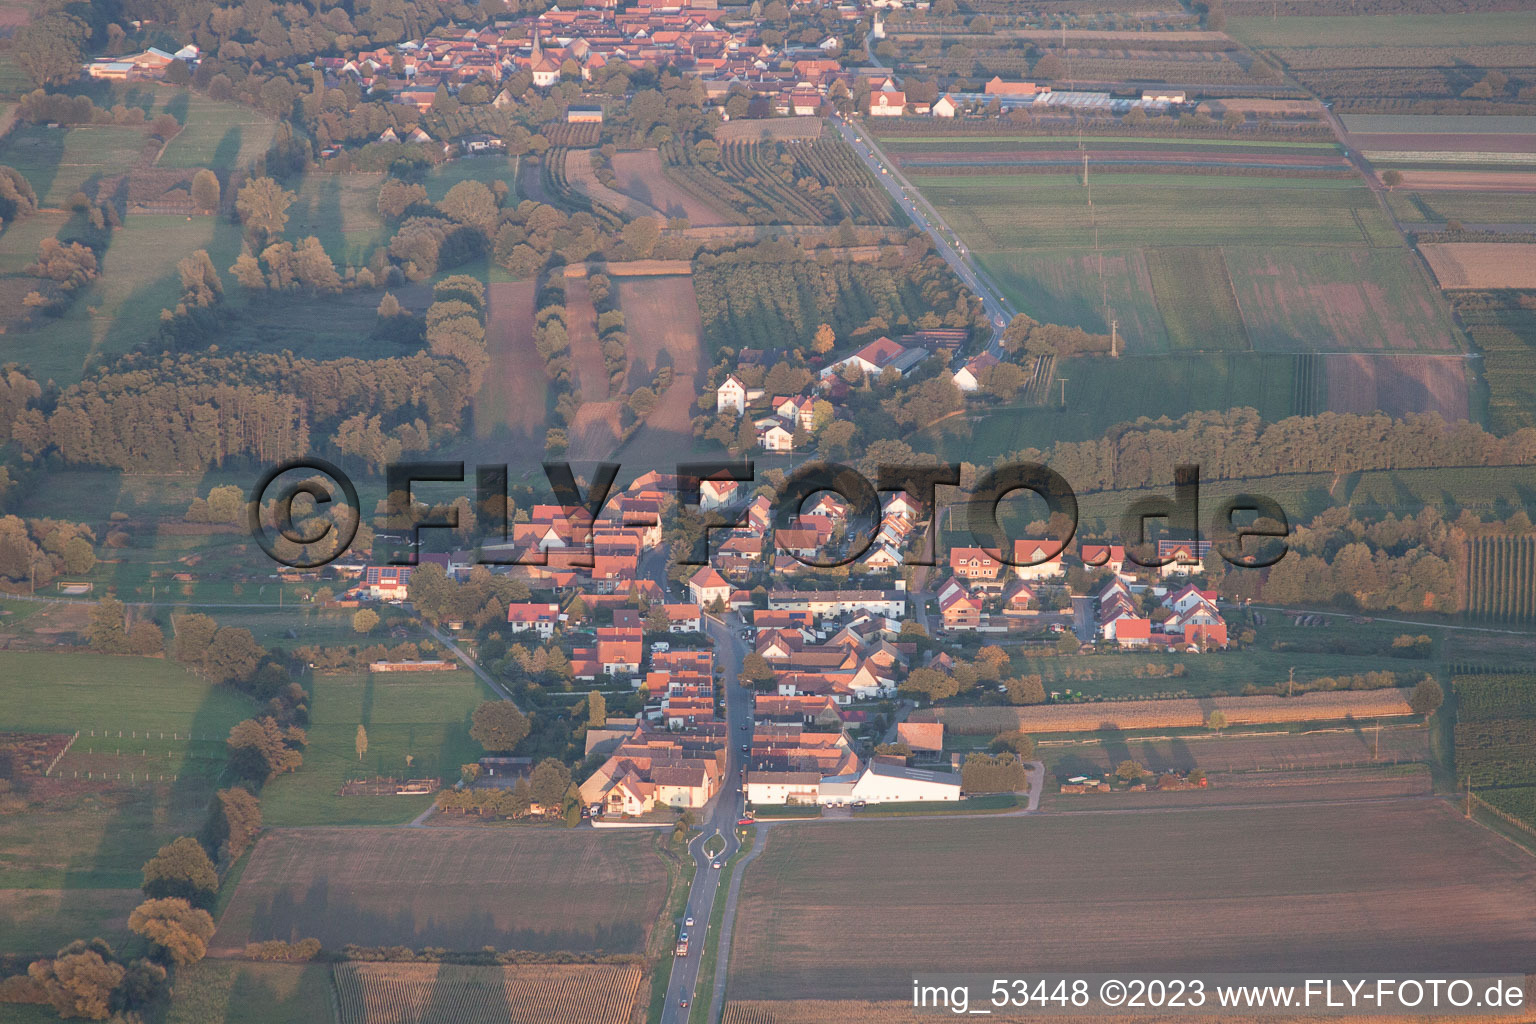 Bird's eye view of Oberhausen in the state Rhineland-Palatinate, Germany